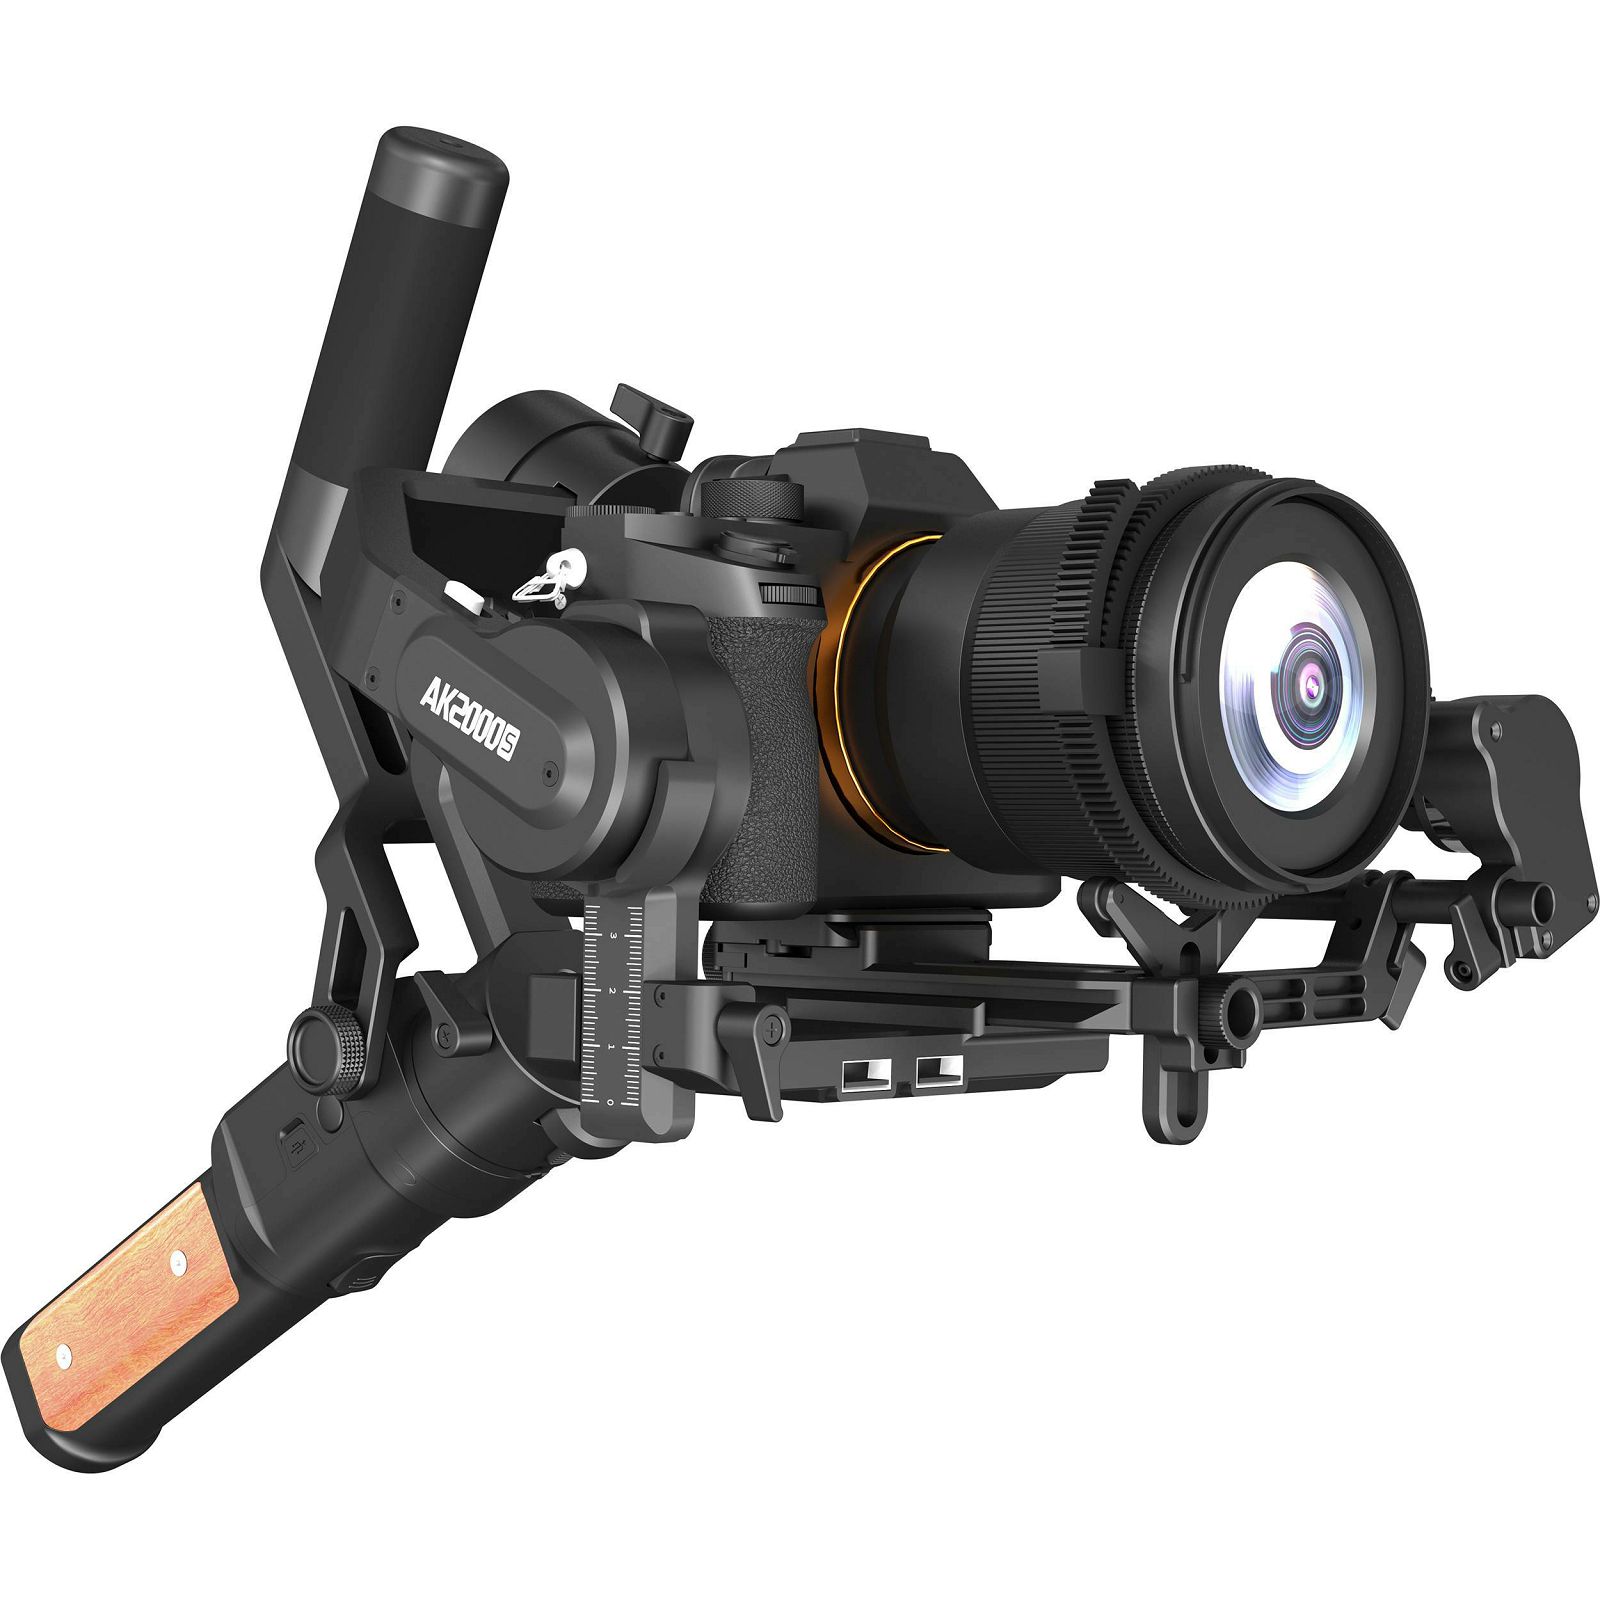 FeiyuTech AK2000S Advanced Kit Gimbal Stabilizer 3-osni stabilizator za video snimanje